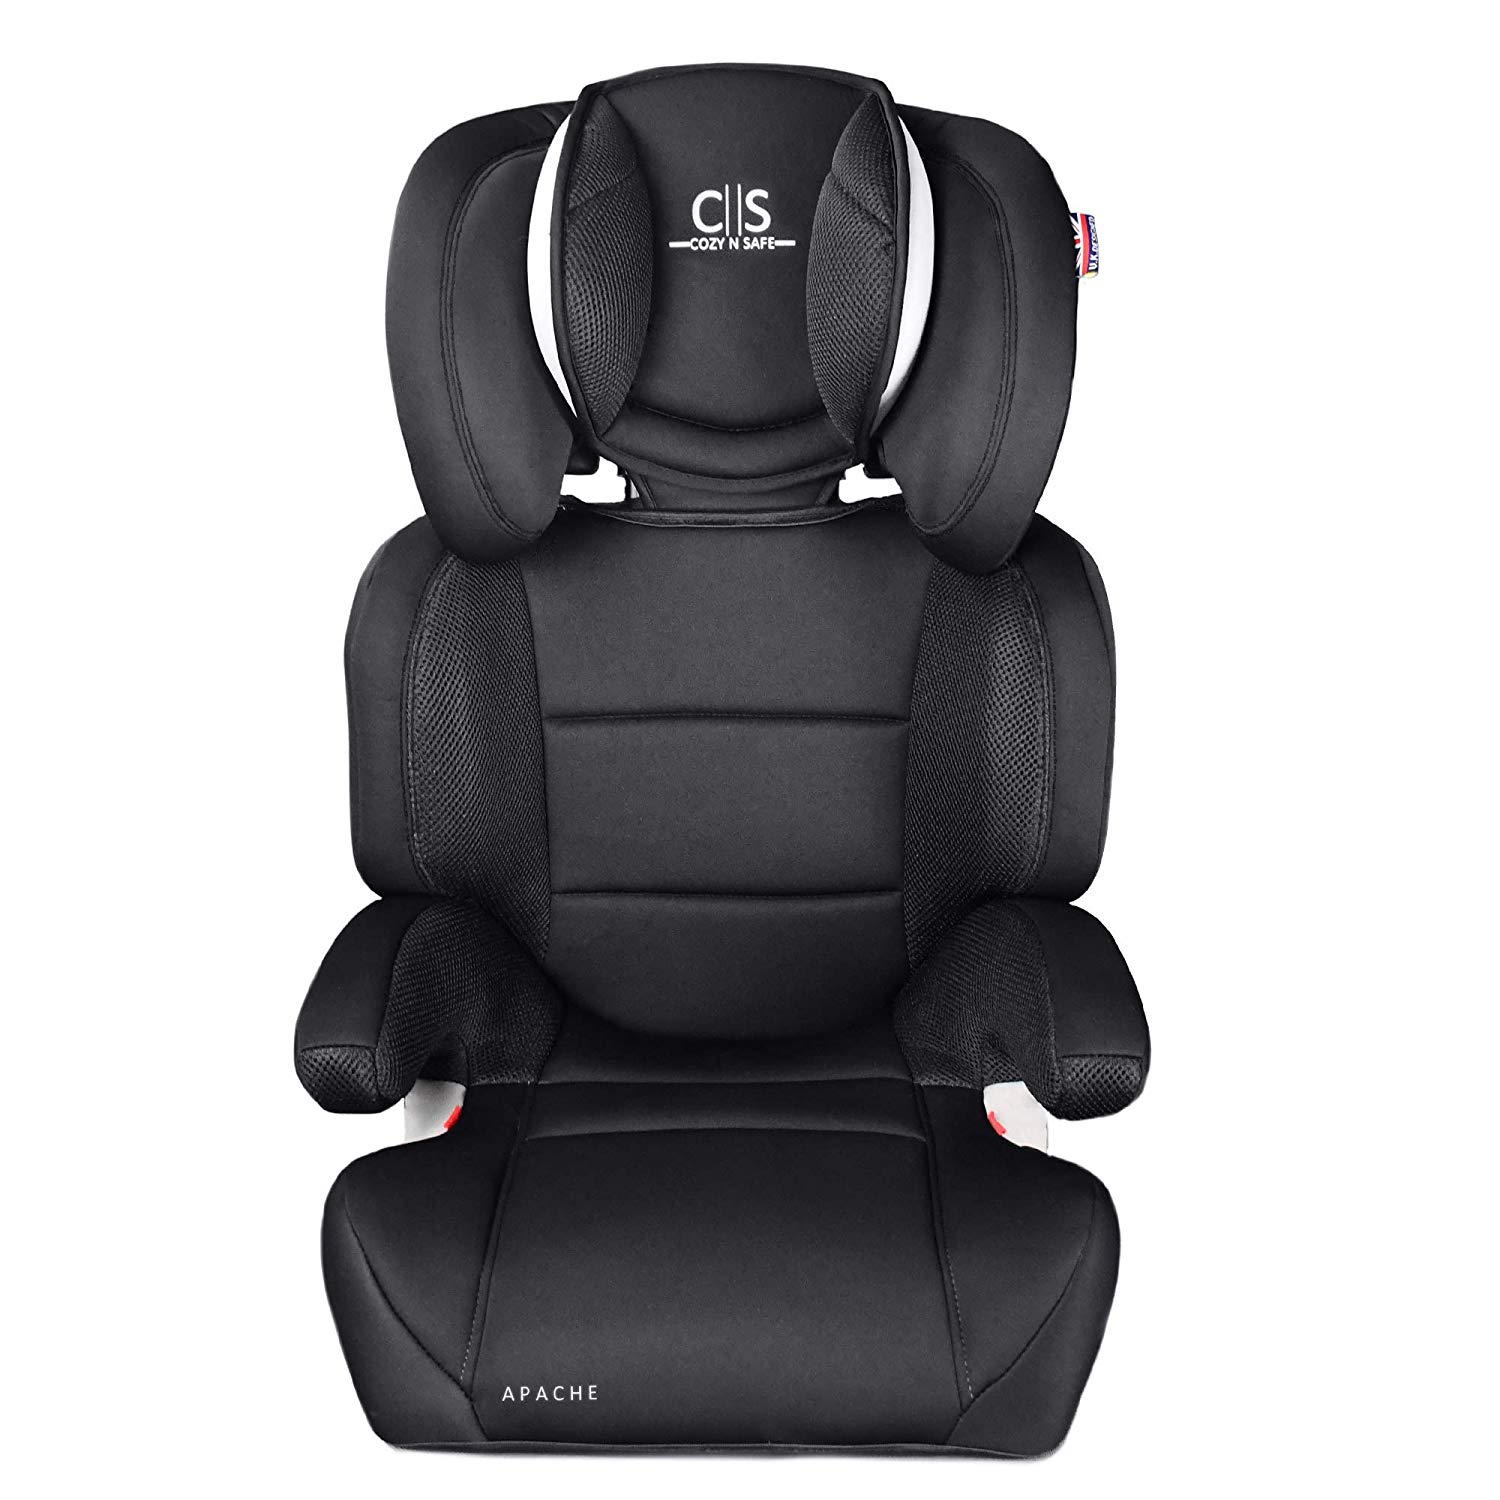 Cozy n Safe Apache Grp 2/3 Child Car Seat Black/Grey